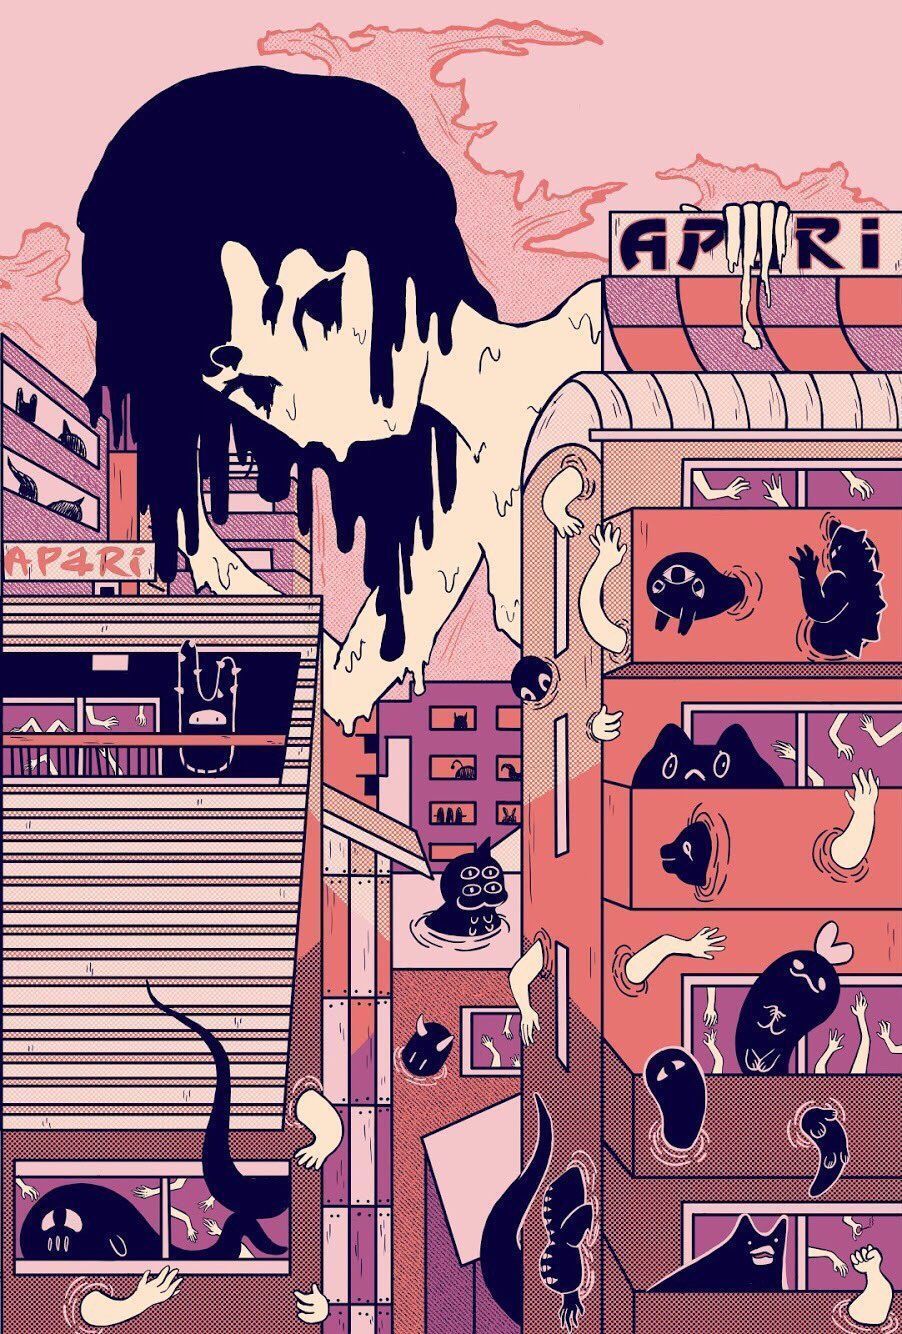 Pink Aesthetic Anime Wallpaper